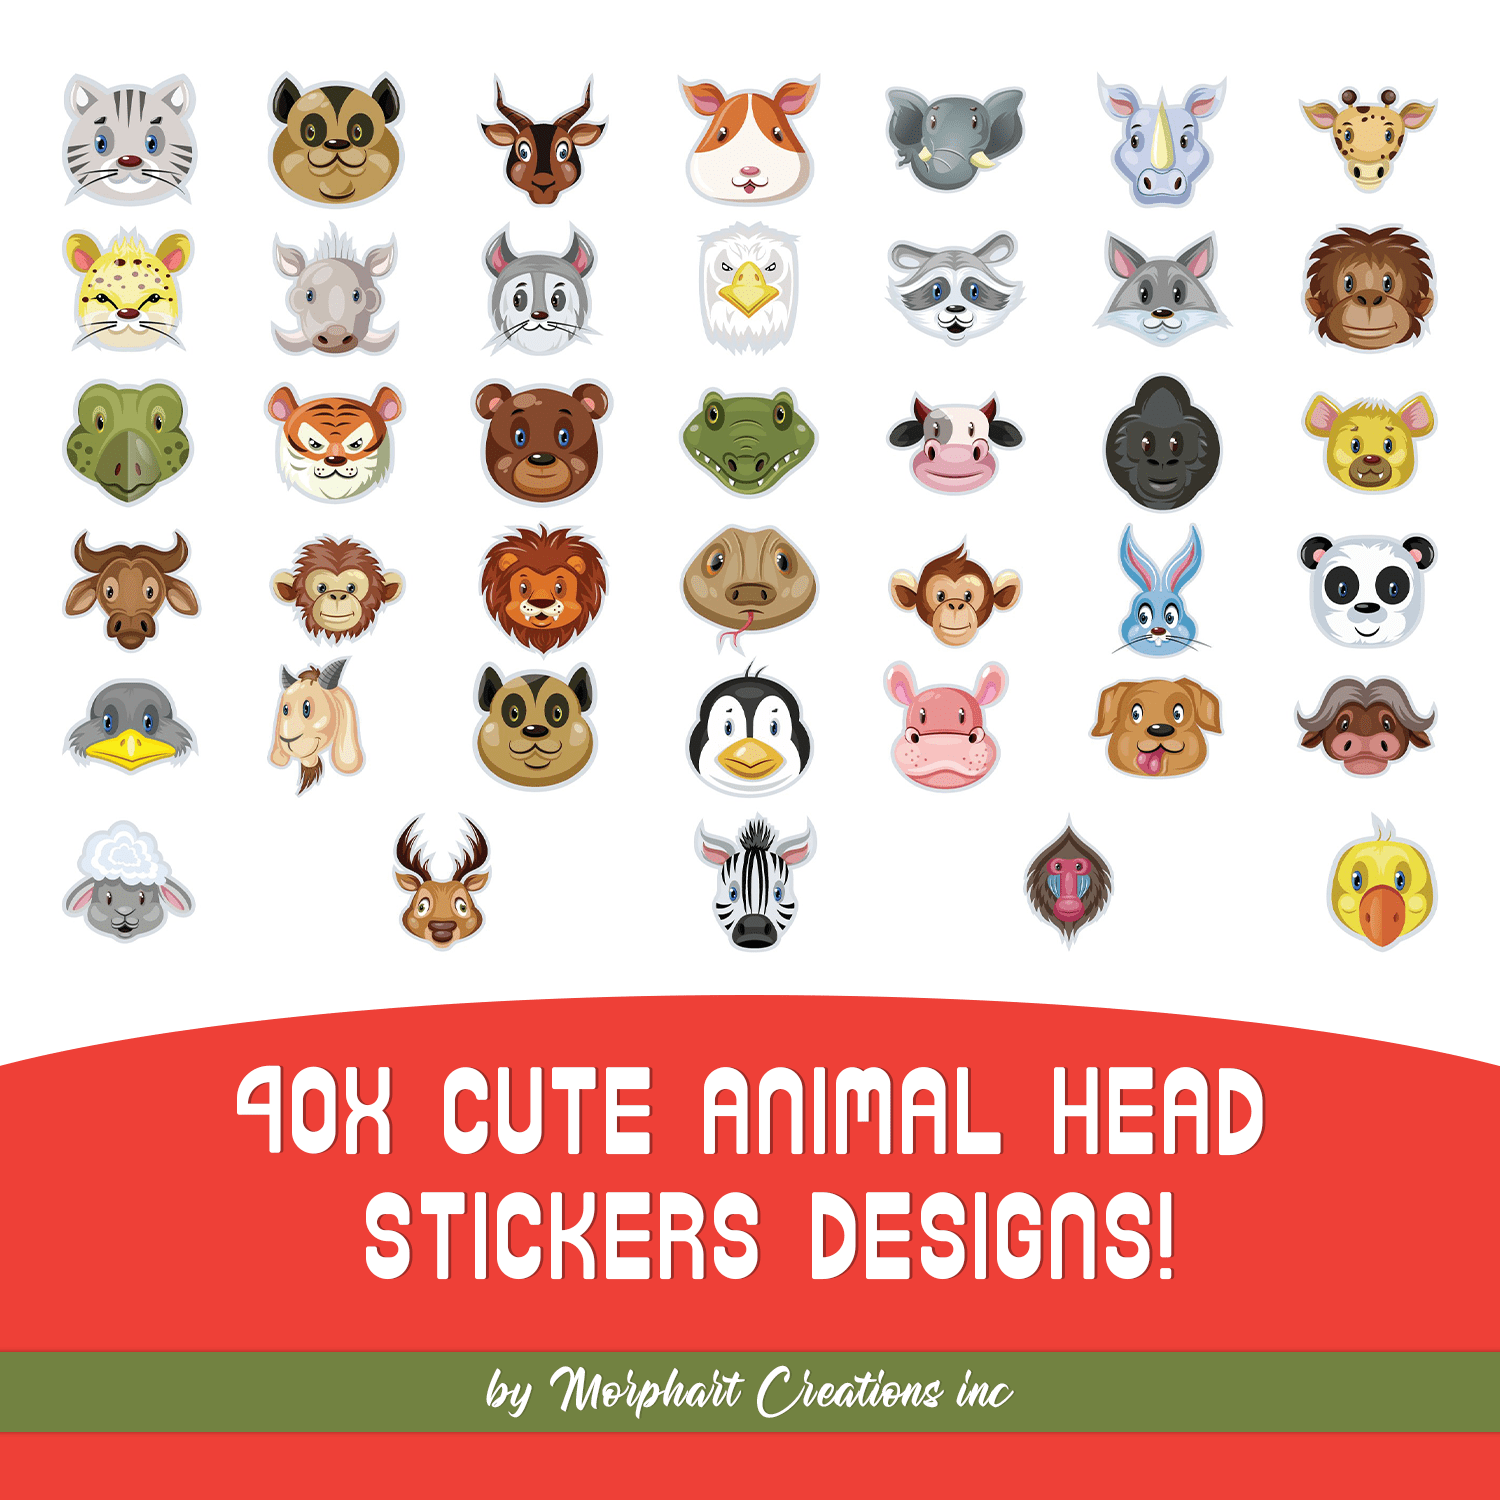 Bundle of cute animal images.